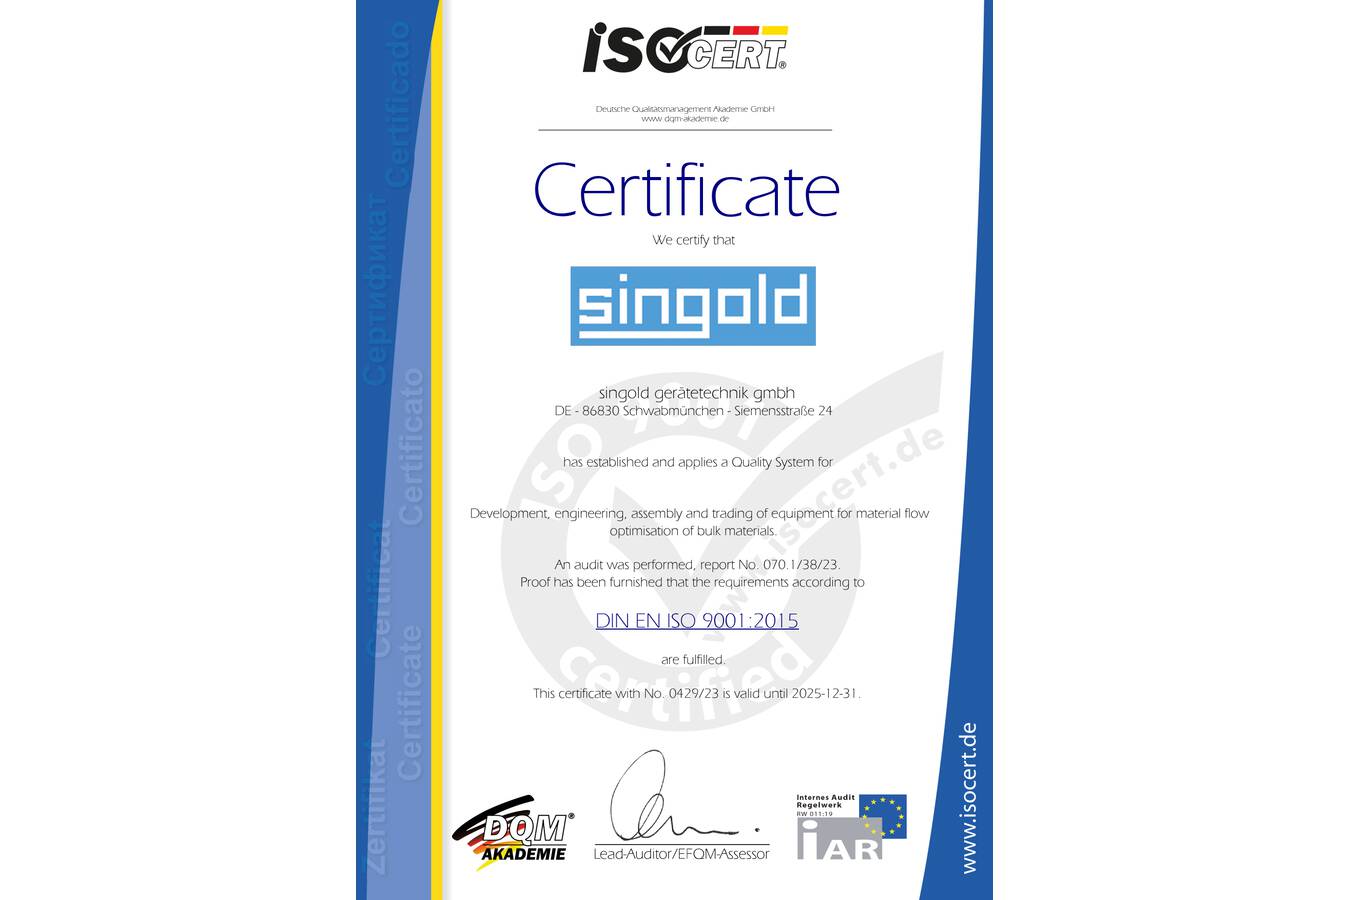 singold erhält Zertifizierung nach ISO 9001:2015 